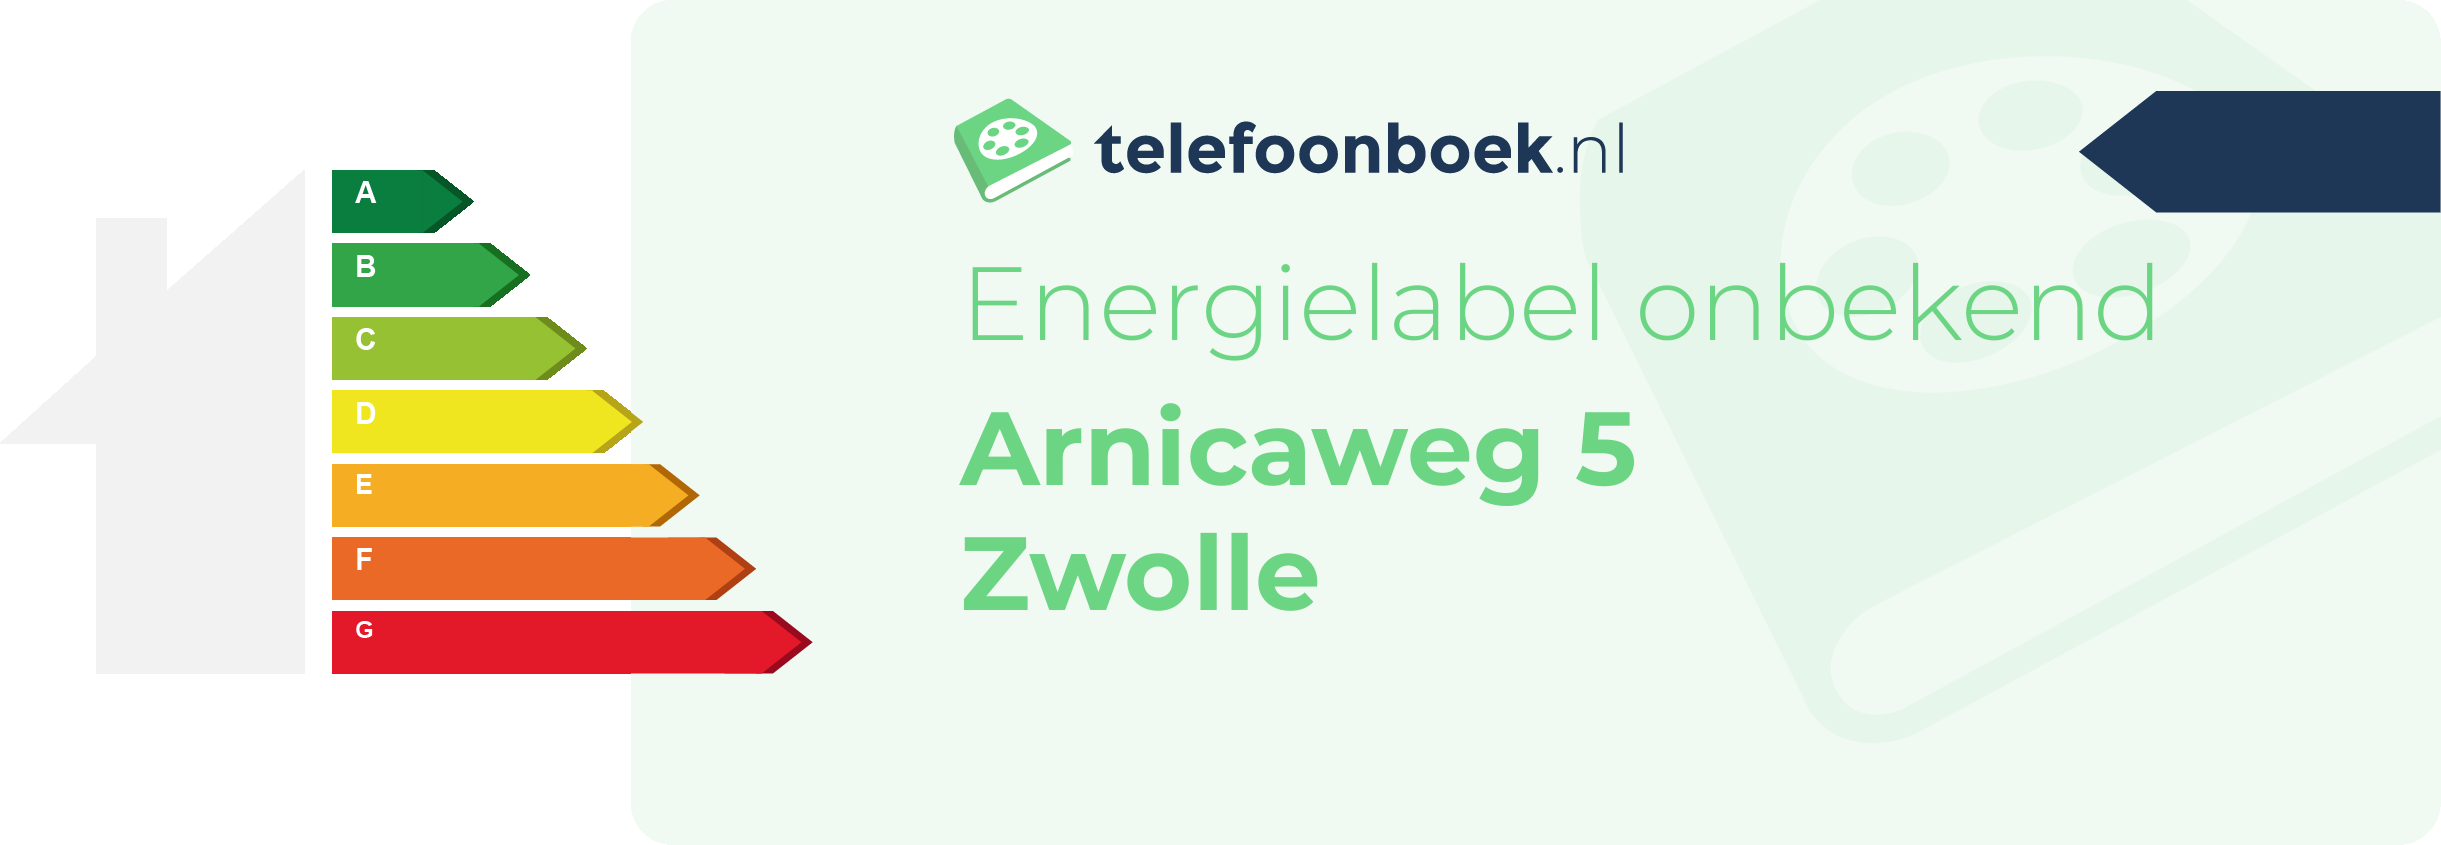 Energielabel Arnicaweg 5 Zwolle